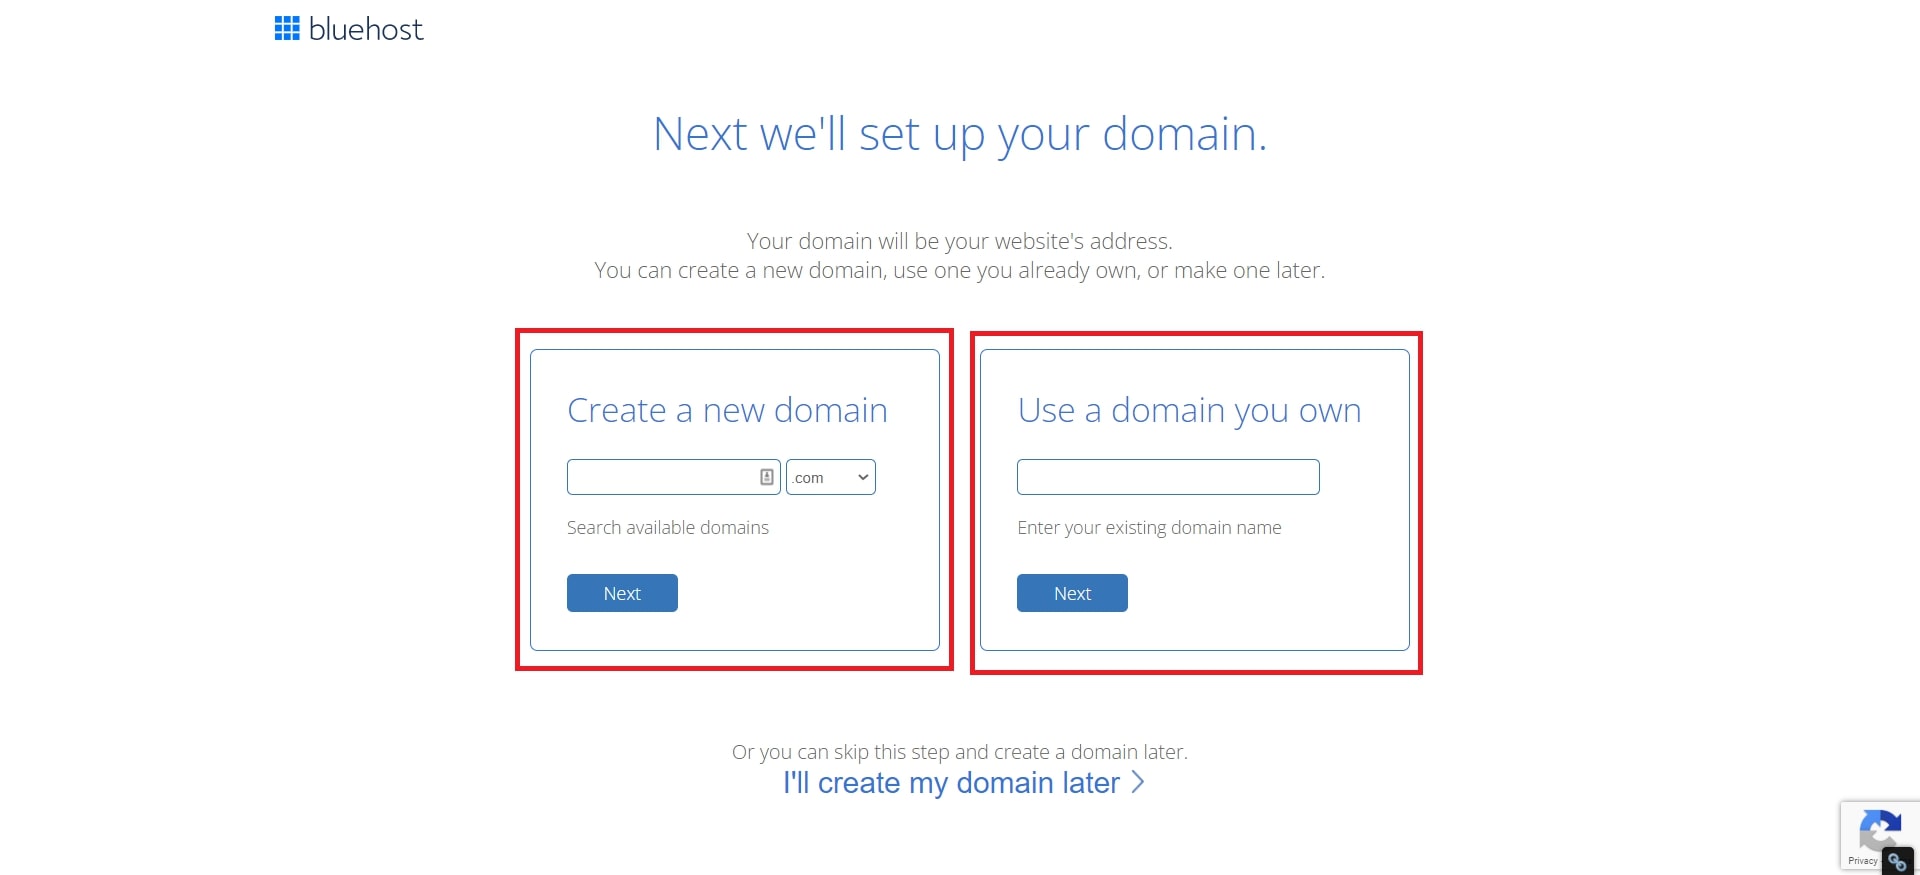 bluehost-domain-registration